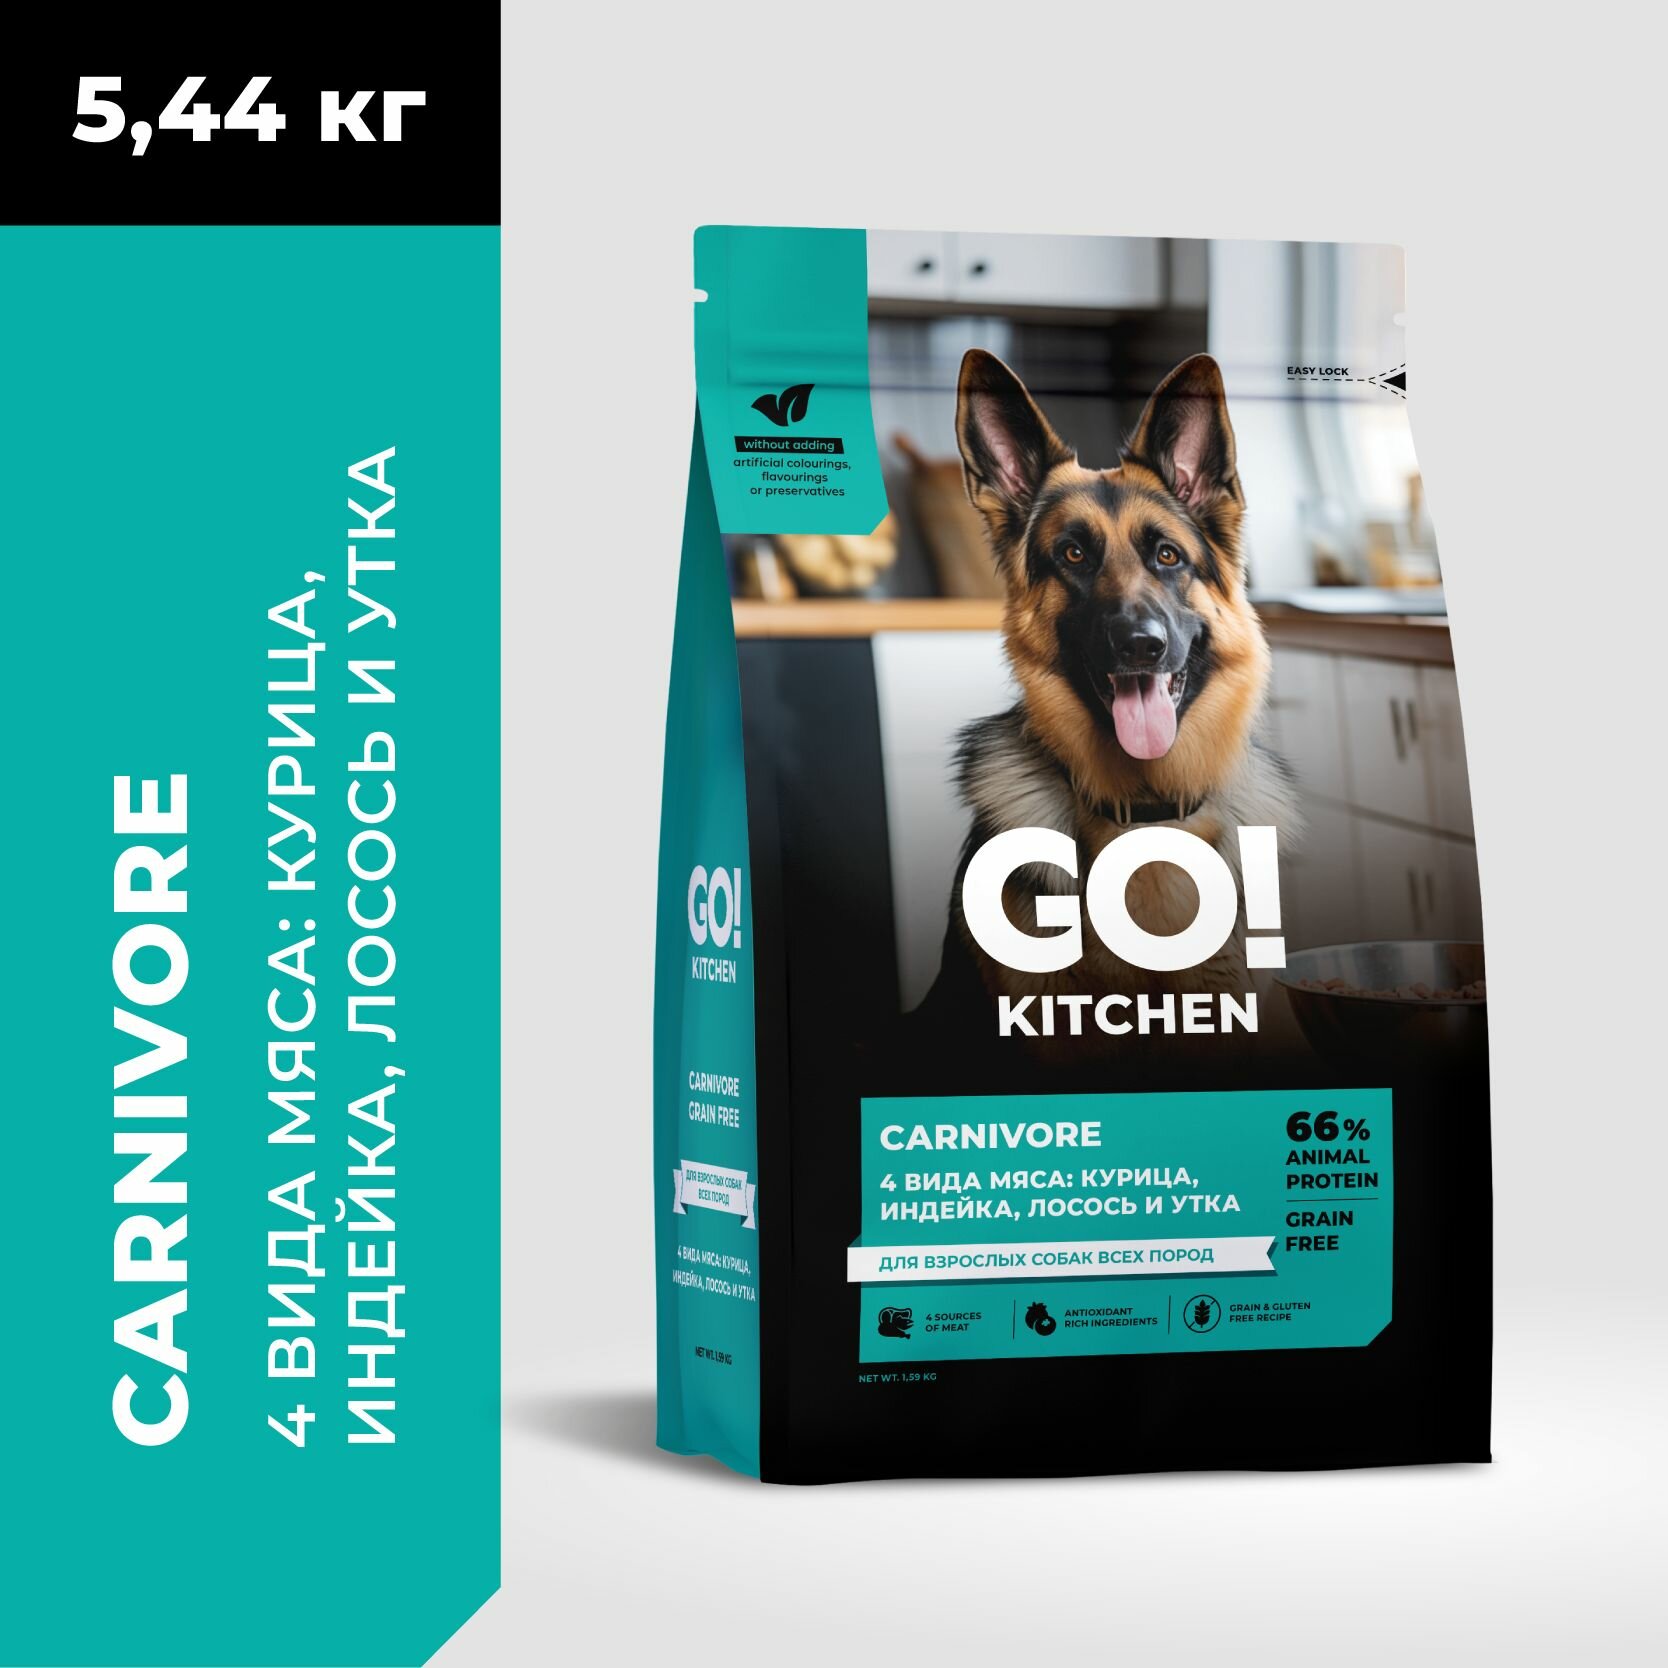 Go! Kitchen Carnivore Grain Free - Сухой корм для собак 4 вида мяса, с курицей, индейкой, уткой и лососем (5.44 кг)